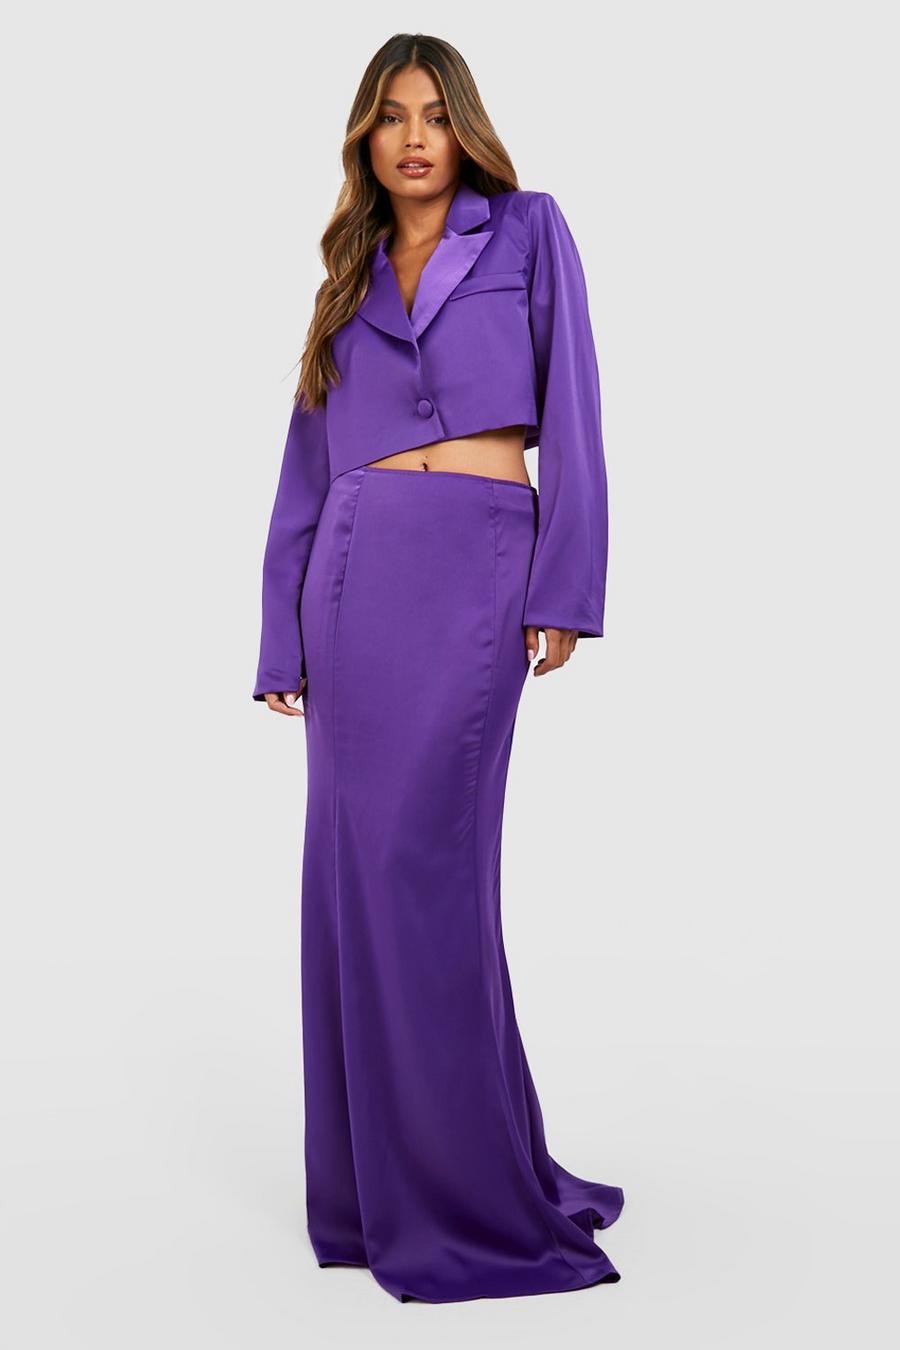 Jewel purple Matte Satin Fluid Maxi Skirt